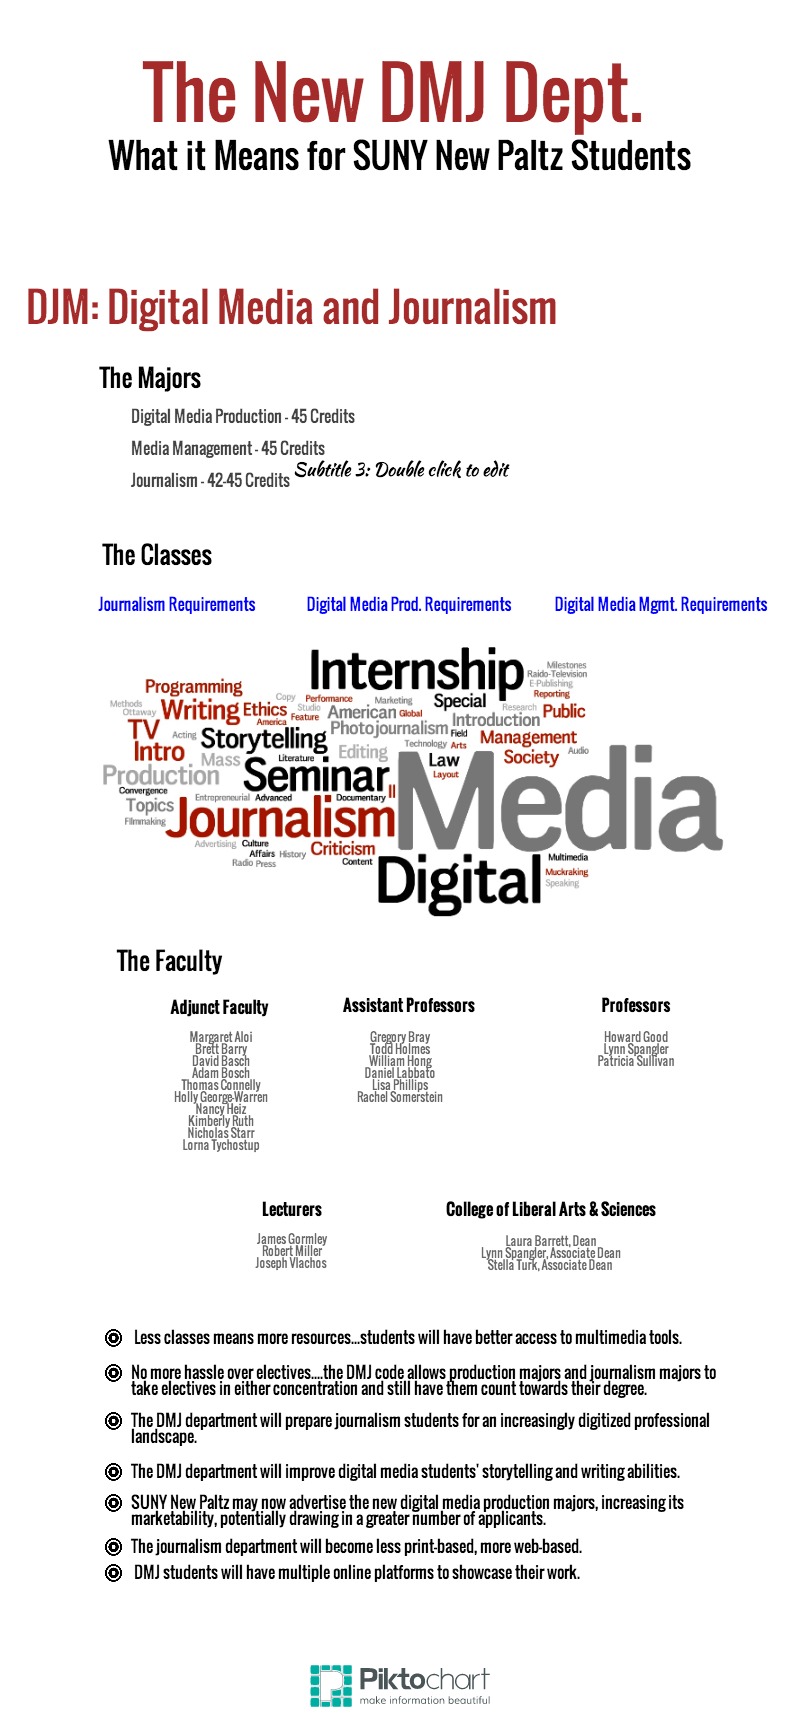 New Digital Media and Journalism Department